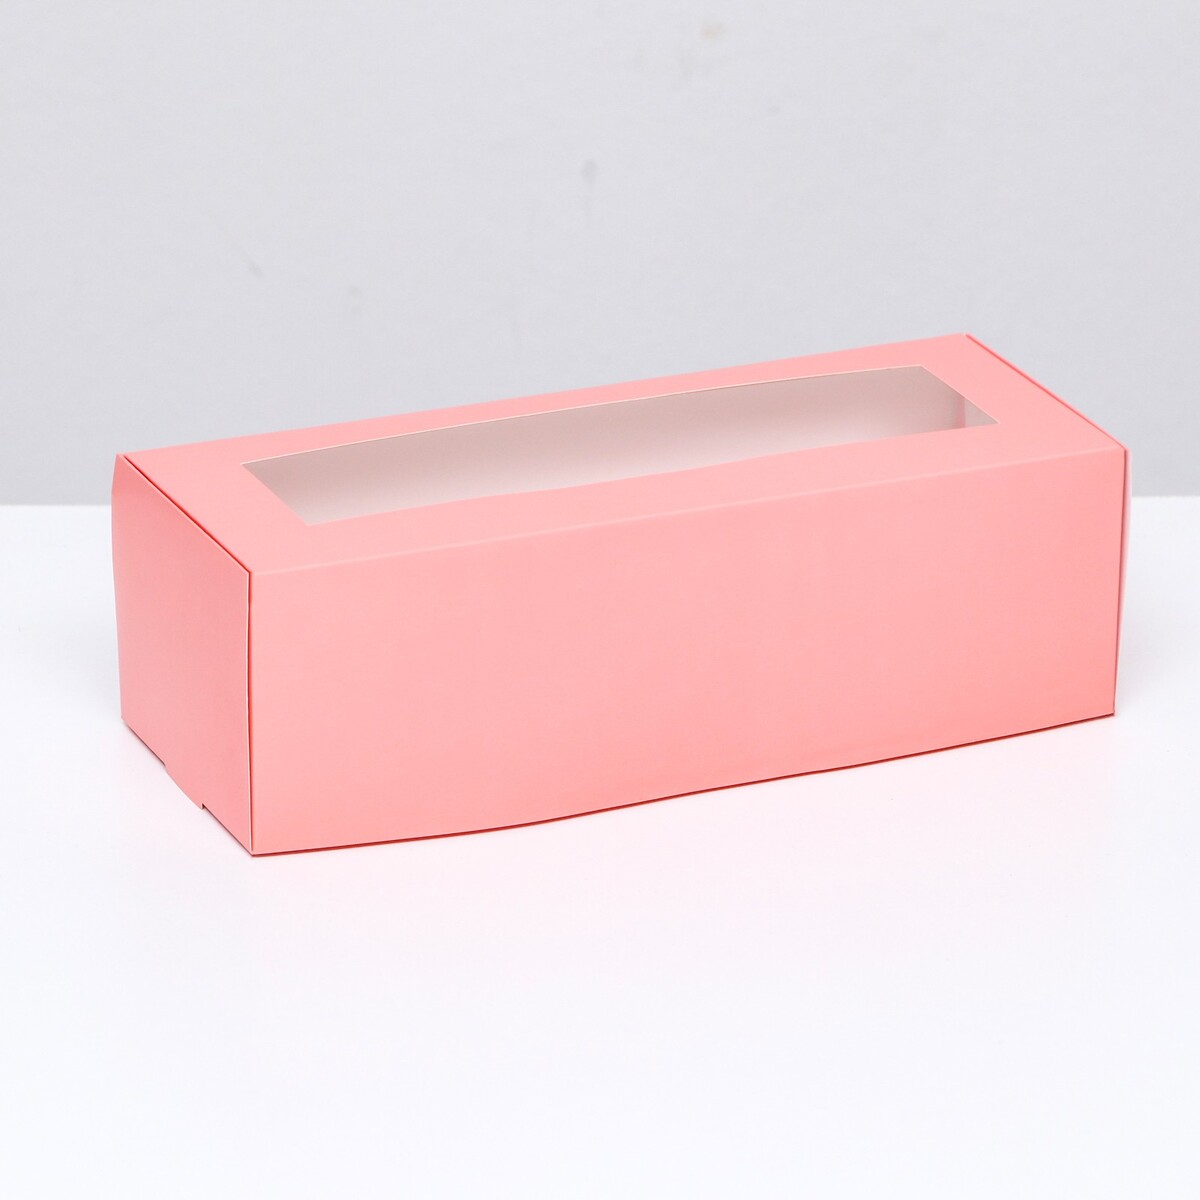 Коробка складная с окном под рулет, розовая, 26 х 10 х 8 см коробка под рулет с ручками белая 16 5 х 11 х 10 см